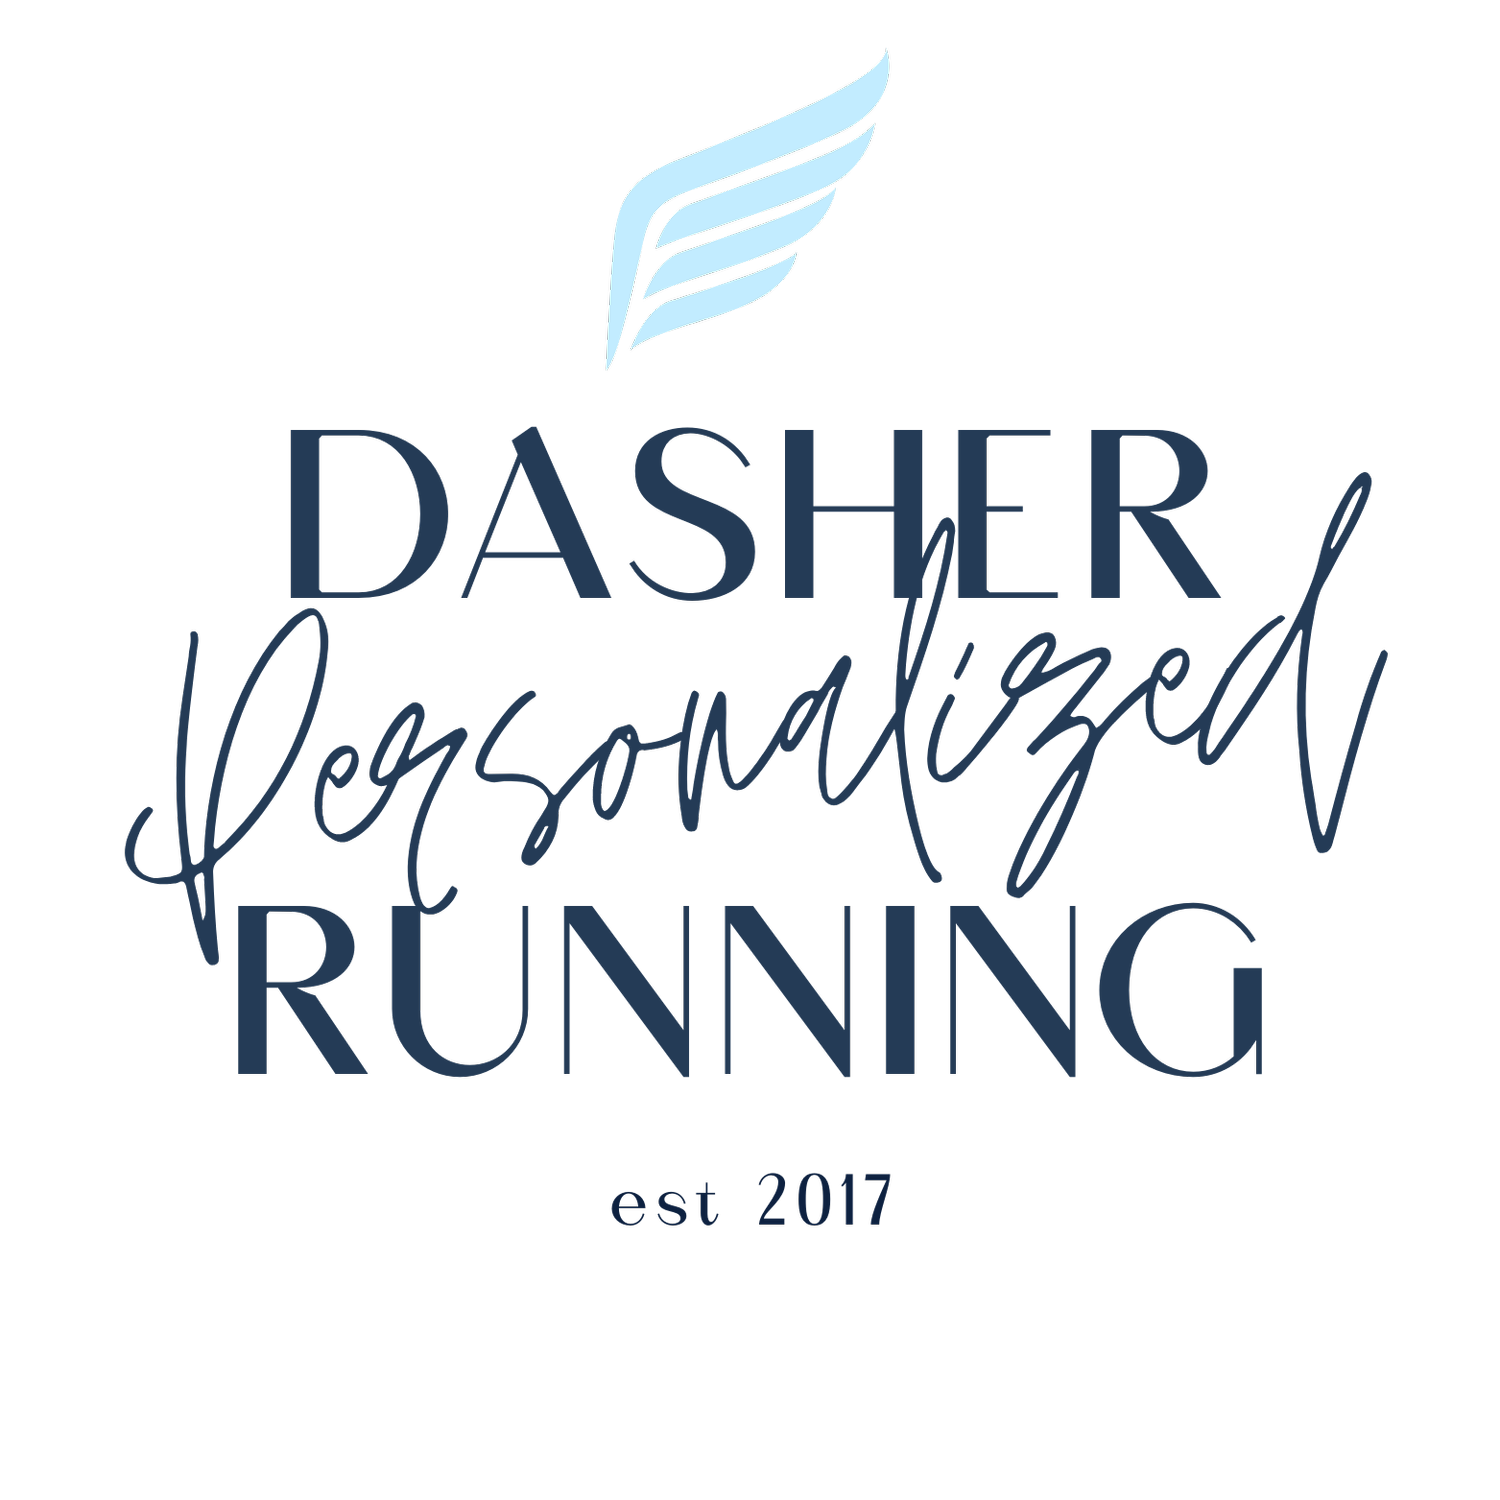 Dasher Personalized Running